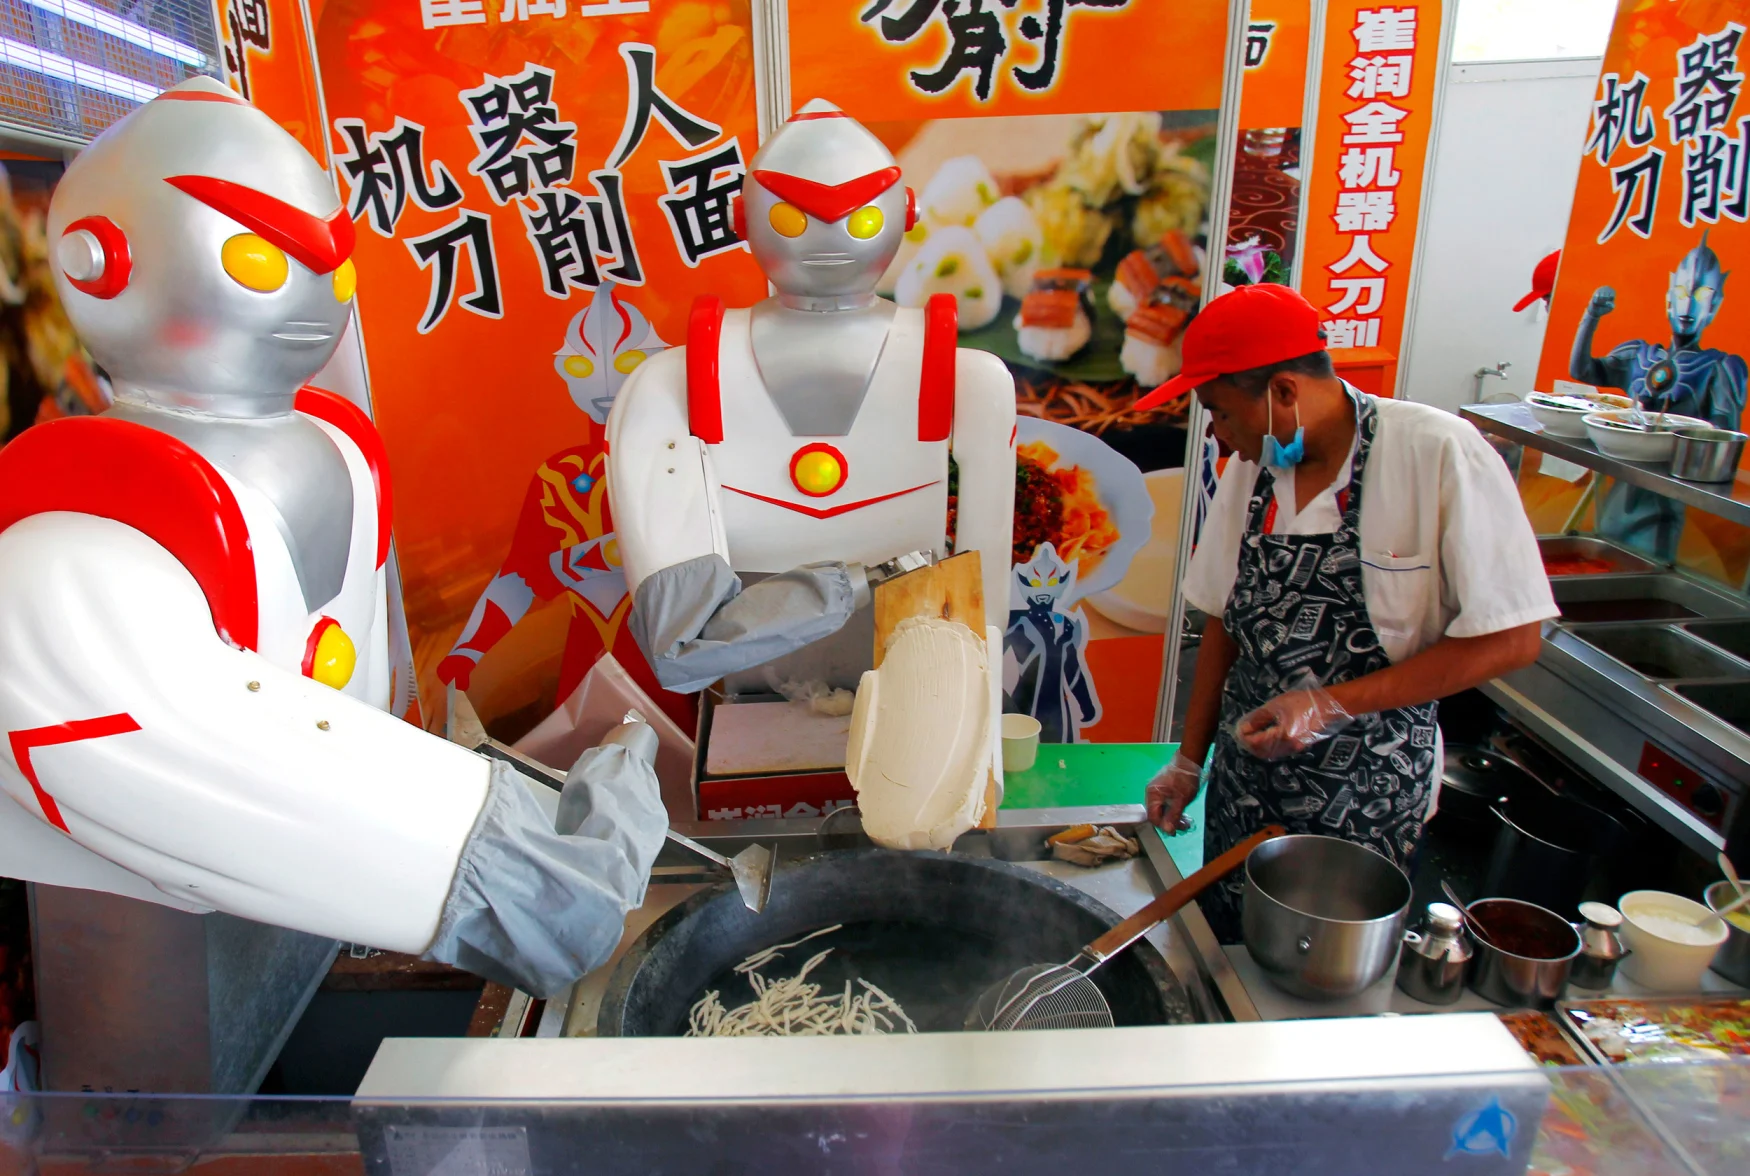 noodle-cutting robot